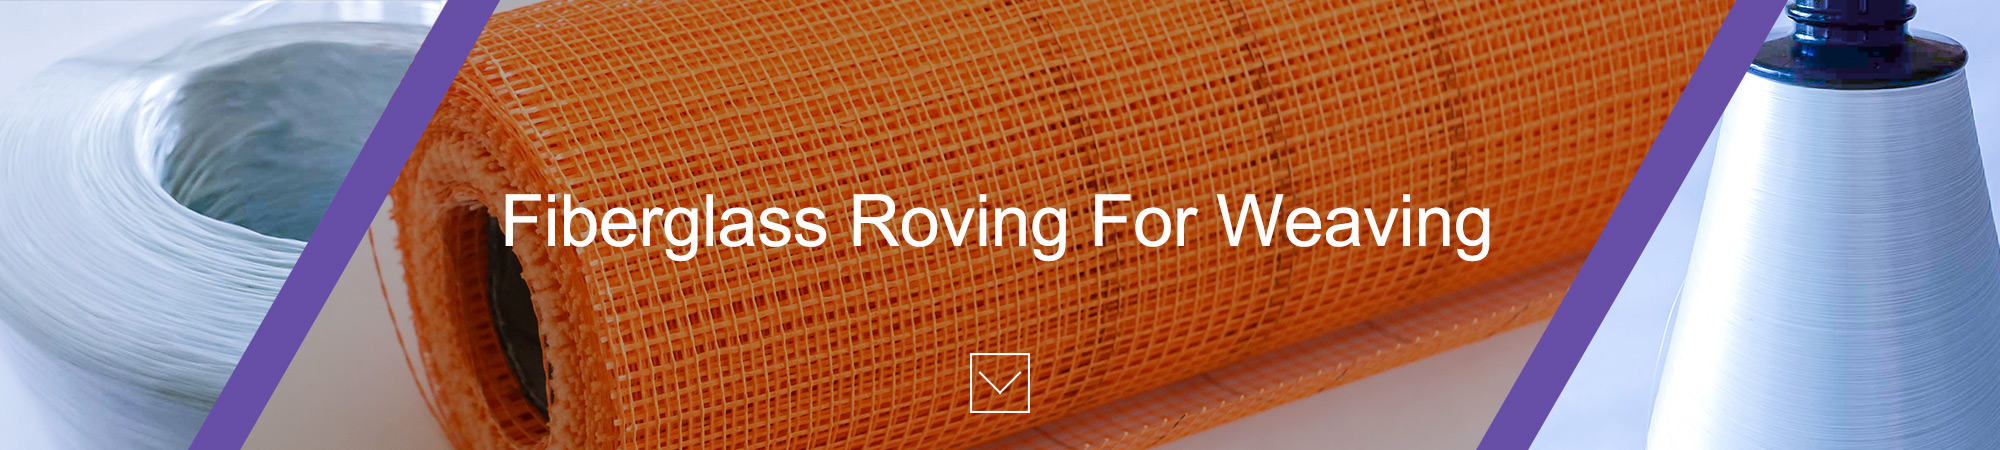 fiberglass roving for weaving-HD Fiberglass